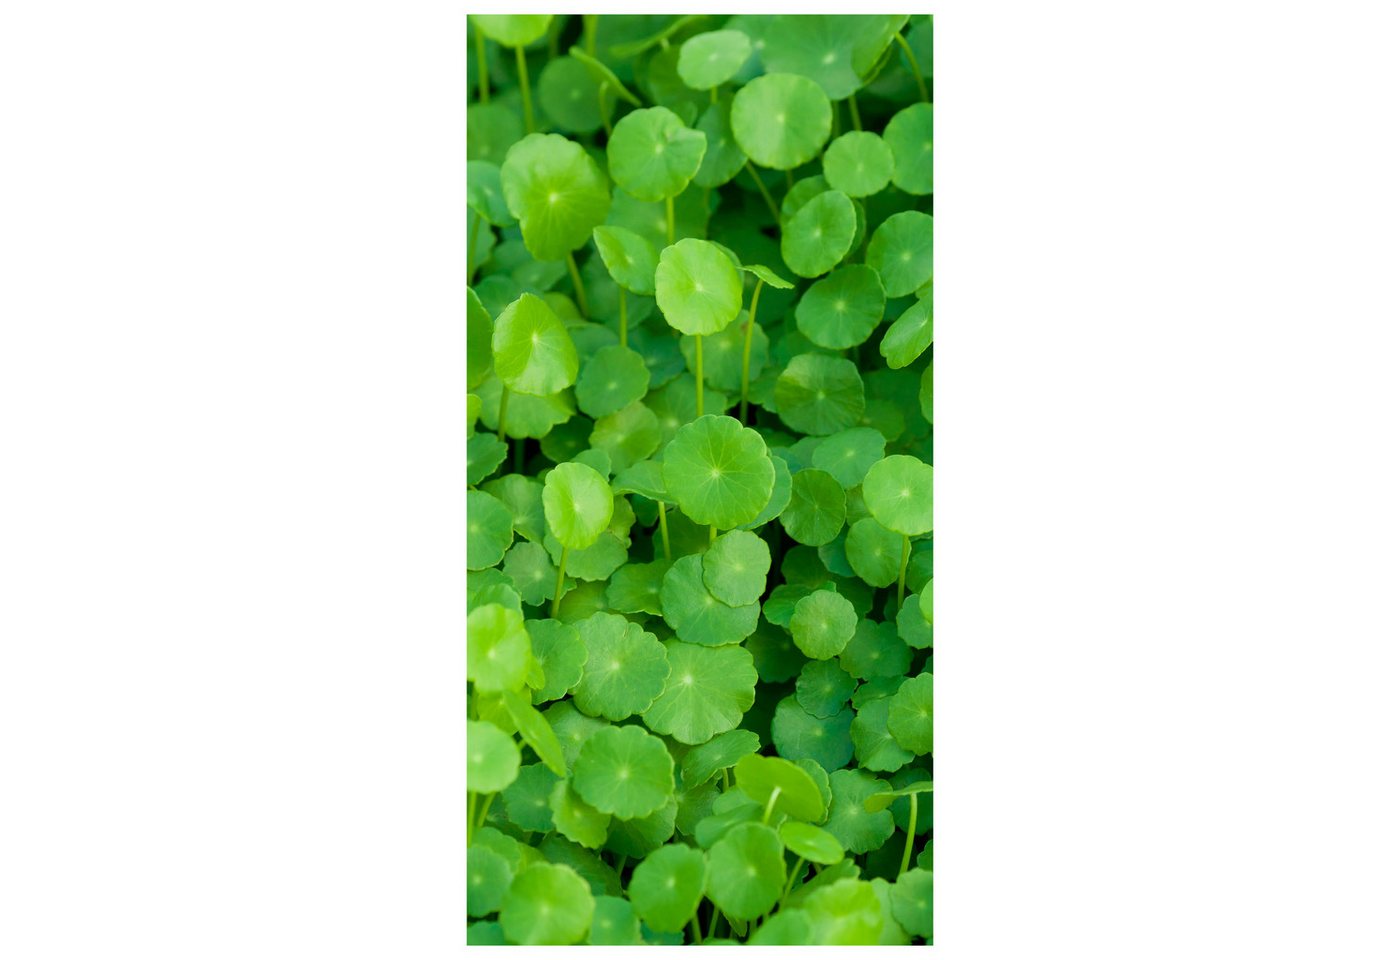 wandmotiv24 Türtapete Grünpflanzen Hintergrund, glatt, Fototapete, Wandtapete, Motivtapete, matt, selbstklebende Vliestapete von wandmotiv24